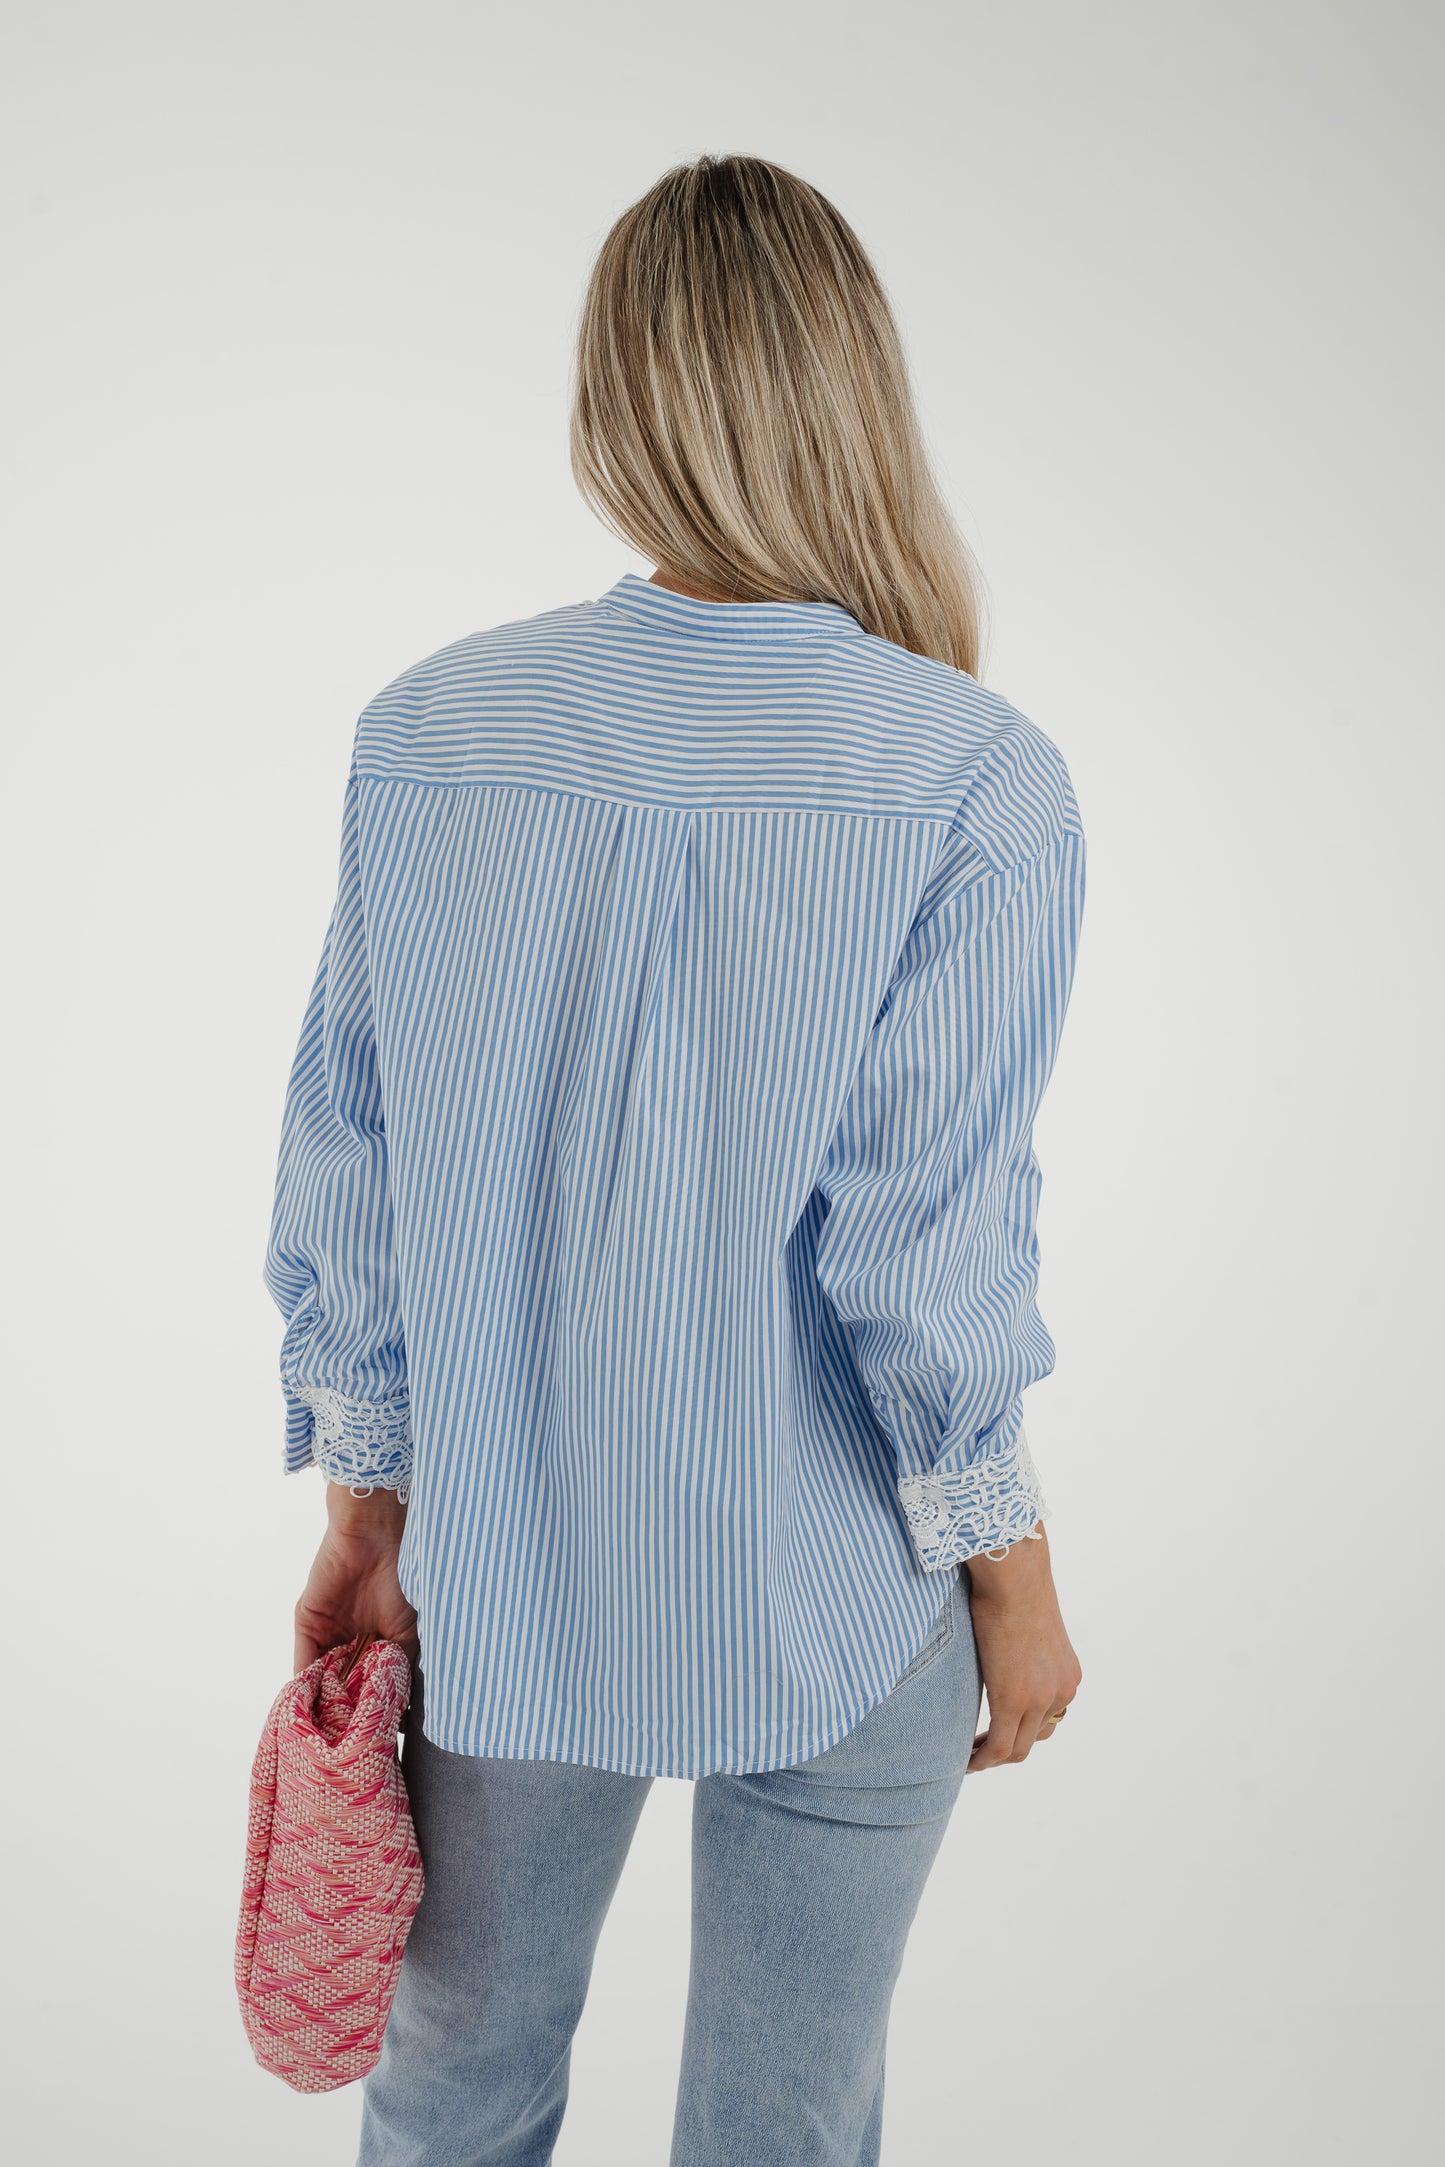 Holly Lace Collar & Cuff Shirt In Blue Stripe